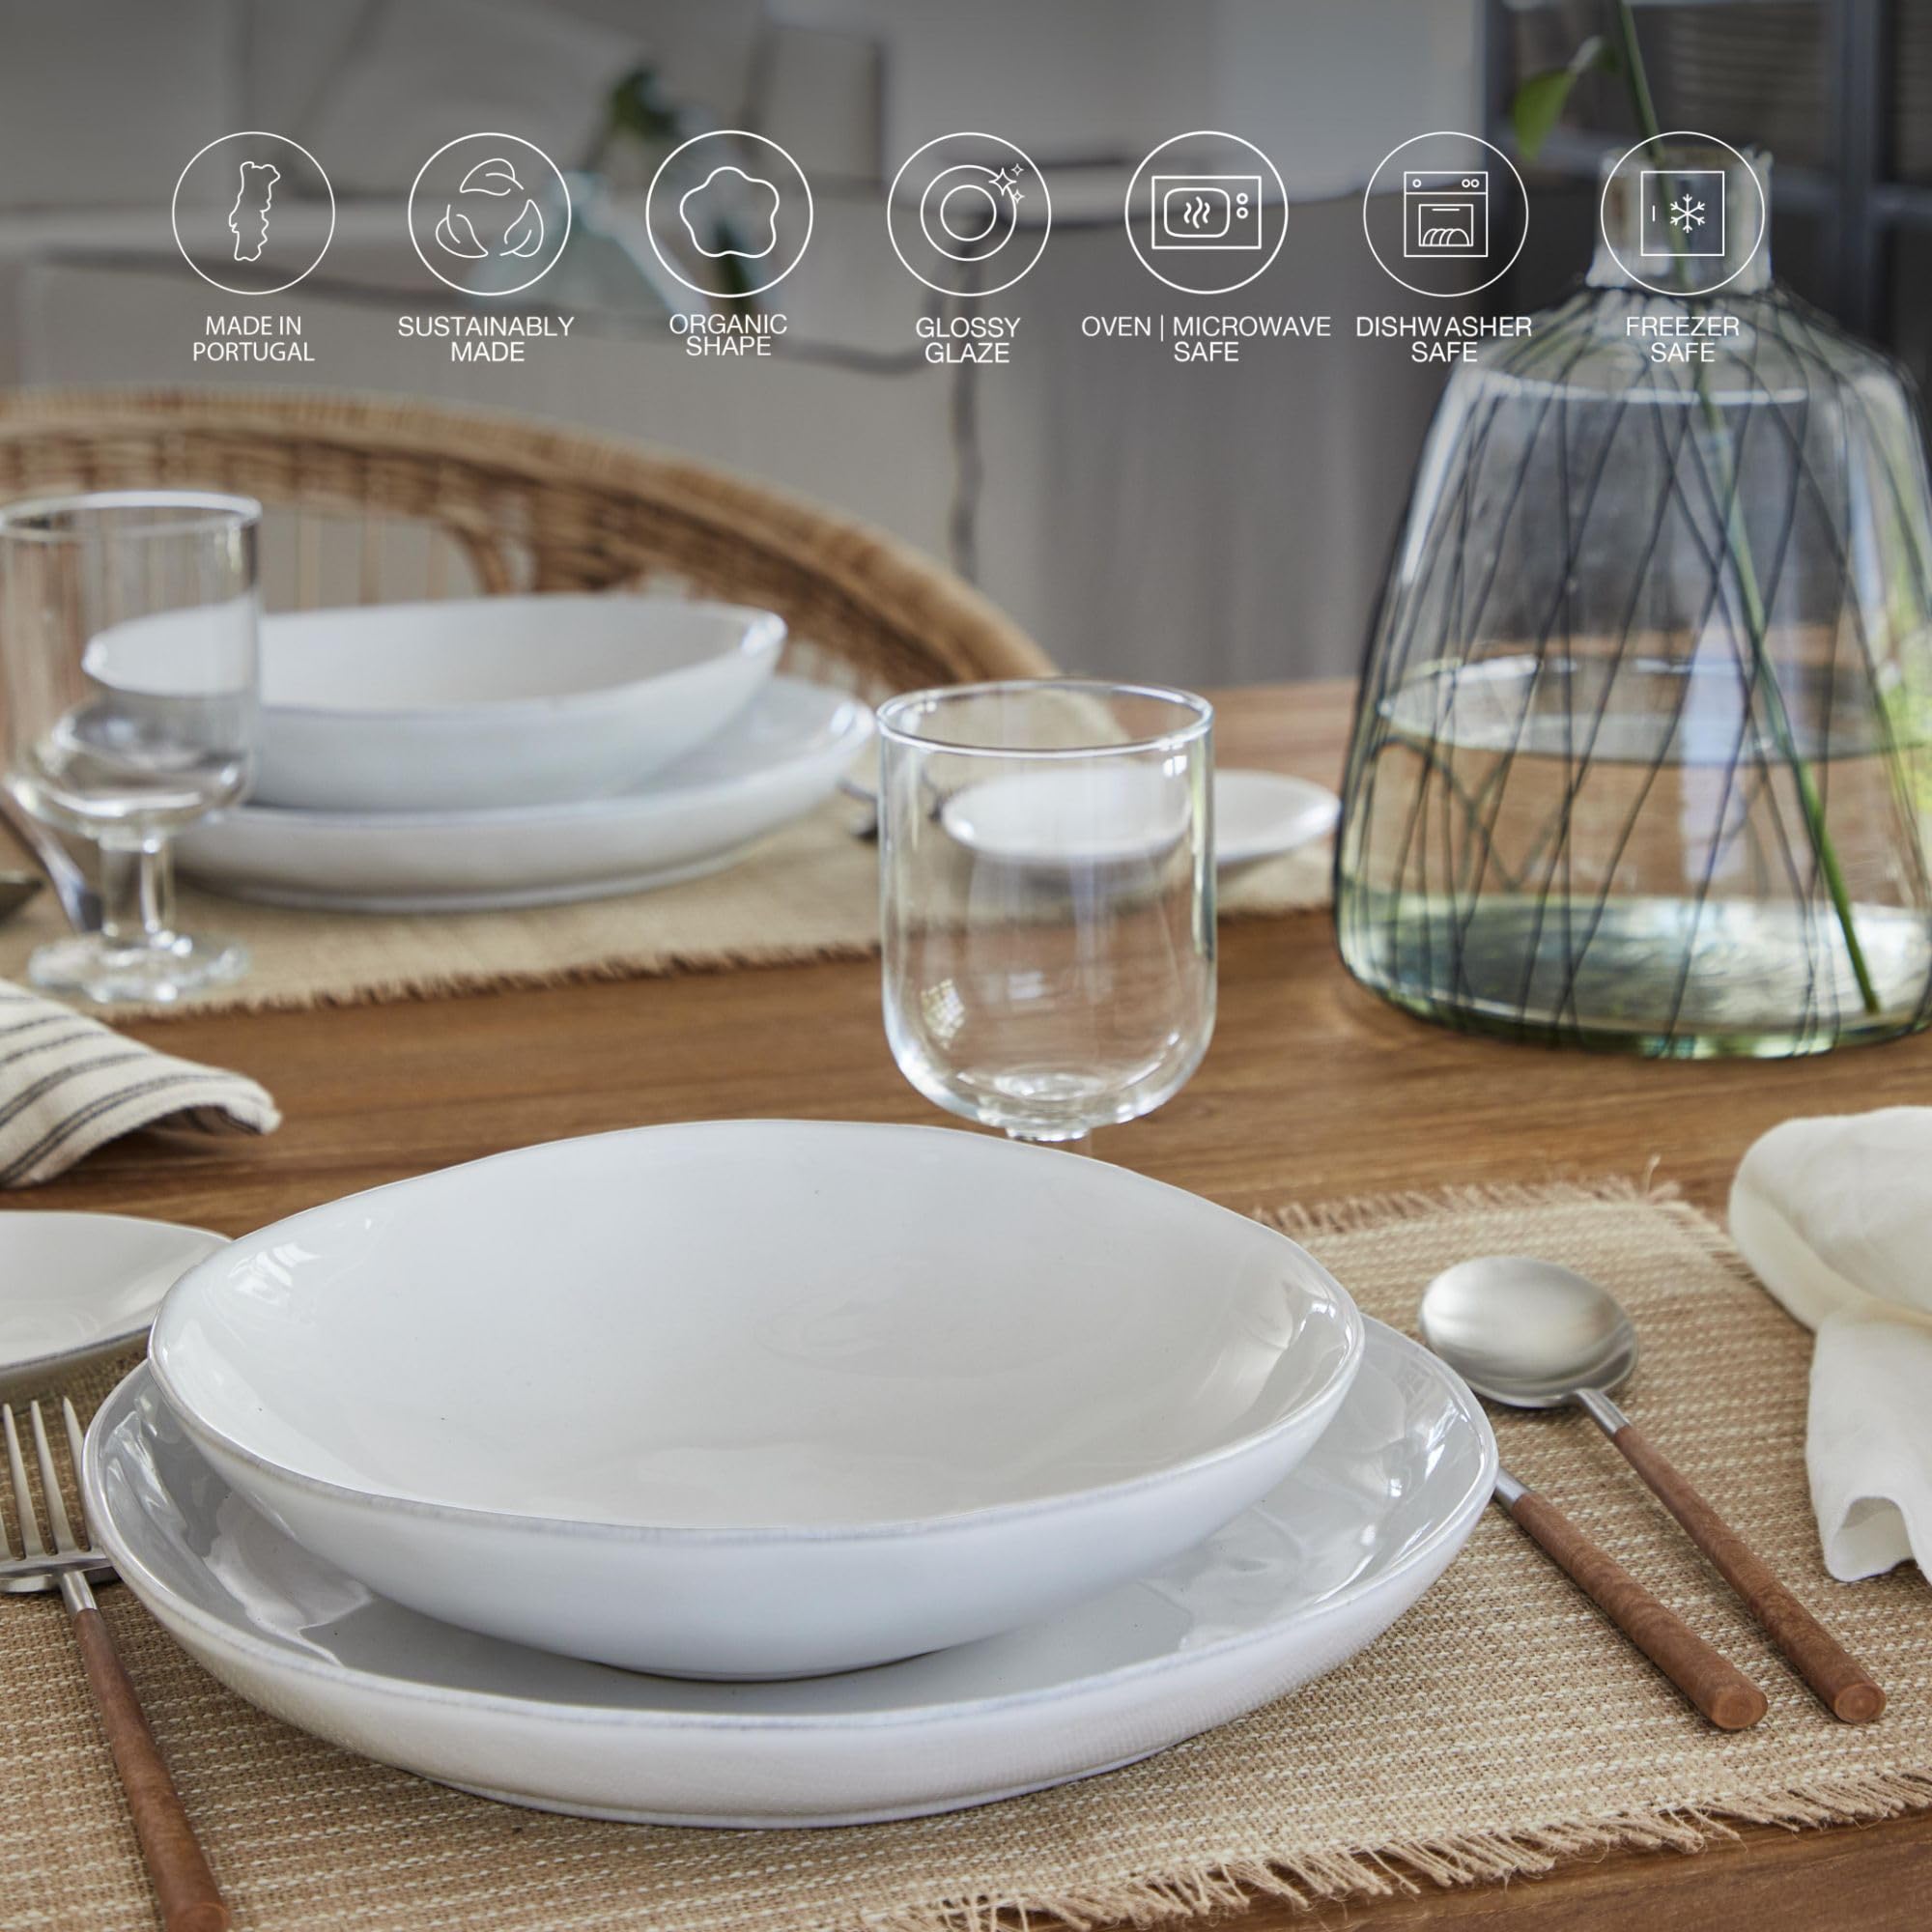 Costa Nova Ceramic Stoneware Soup & Pasta Bowl - Livia Collection, White | Microwave & Dishwasher Safe Dinnerware | Food Safe Glazing | Restaurant Quality Tableware